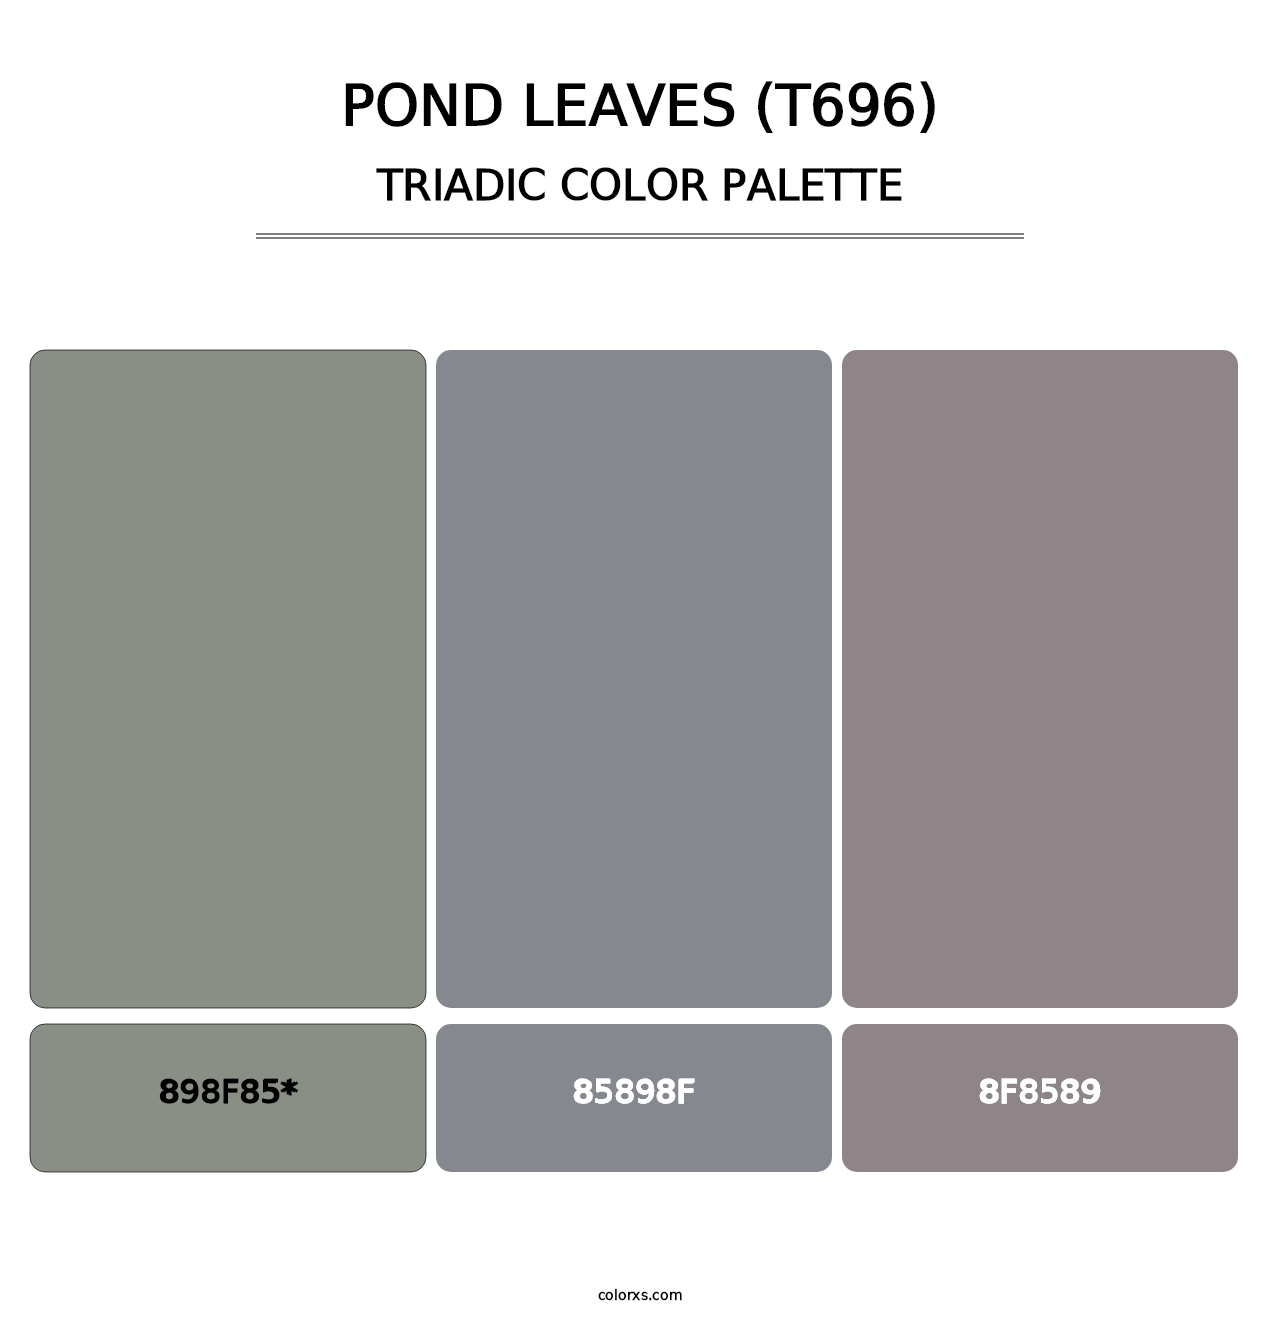 Pond Leaves (T696) - Triadic Color Palette